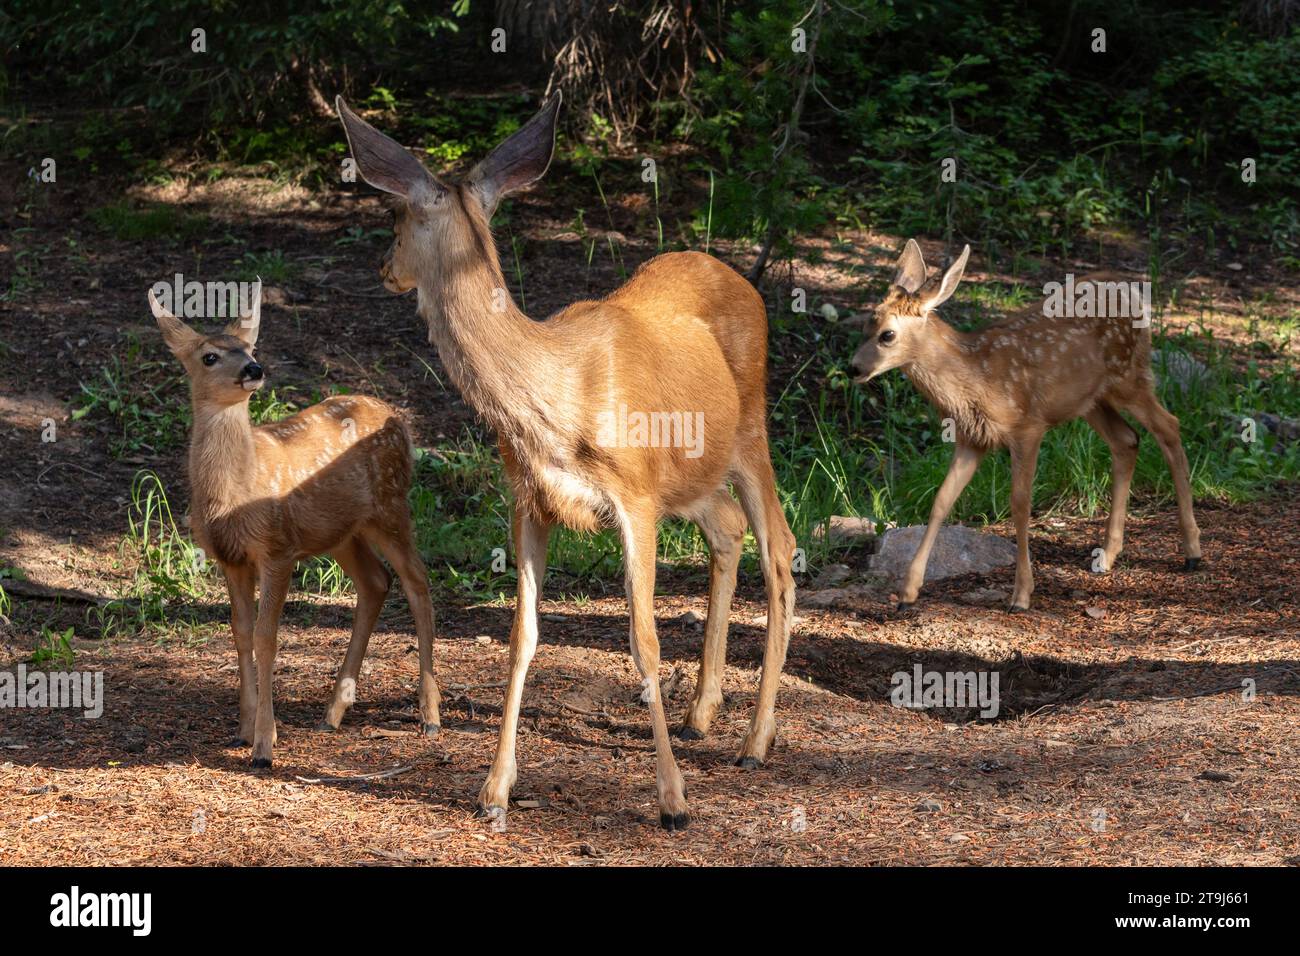 A mule deer doe (Odocoileus hemionus) interacts with her twin fawns. Stock Photo